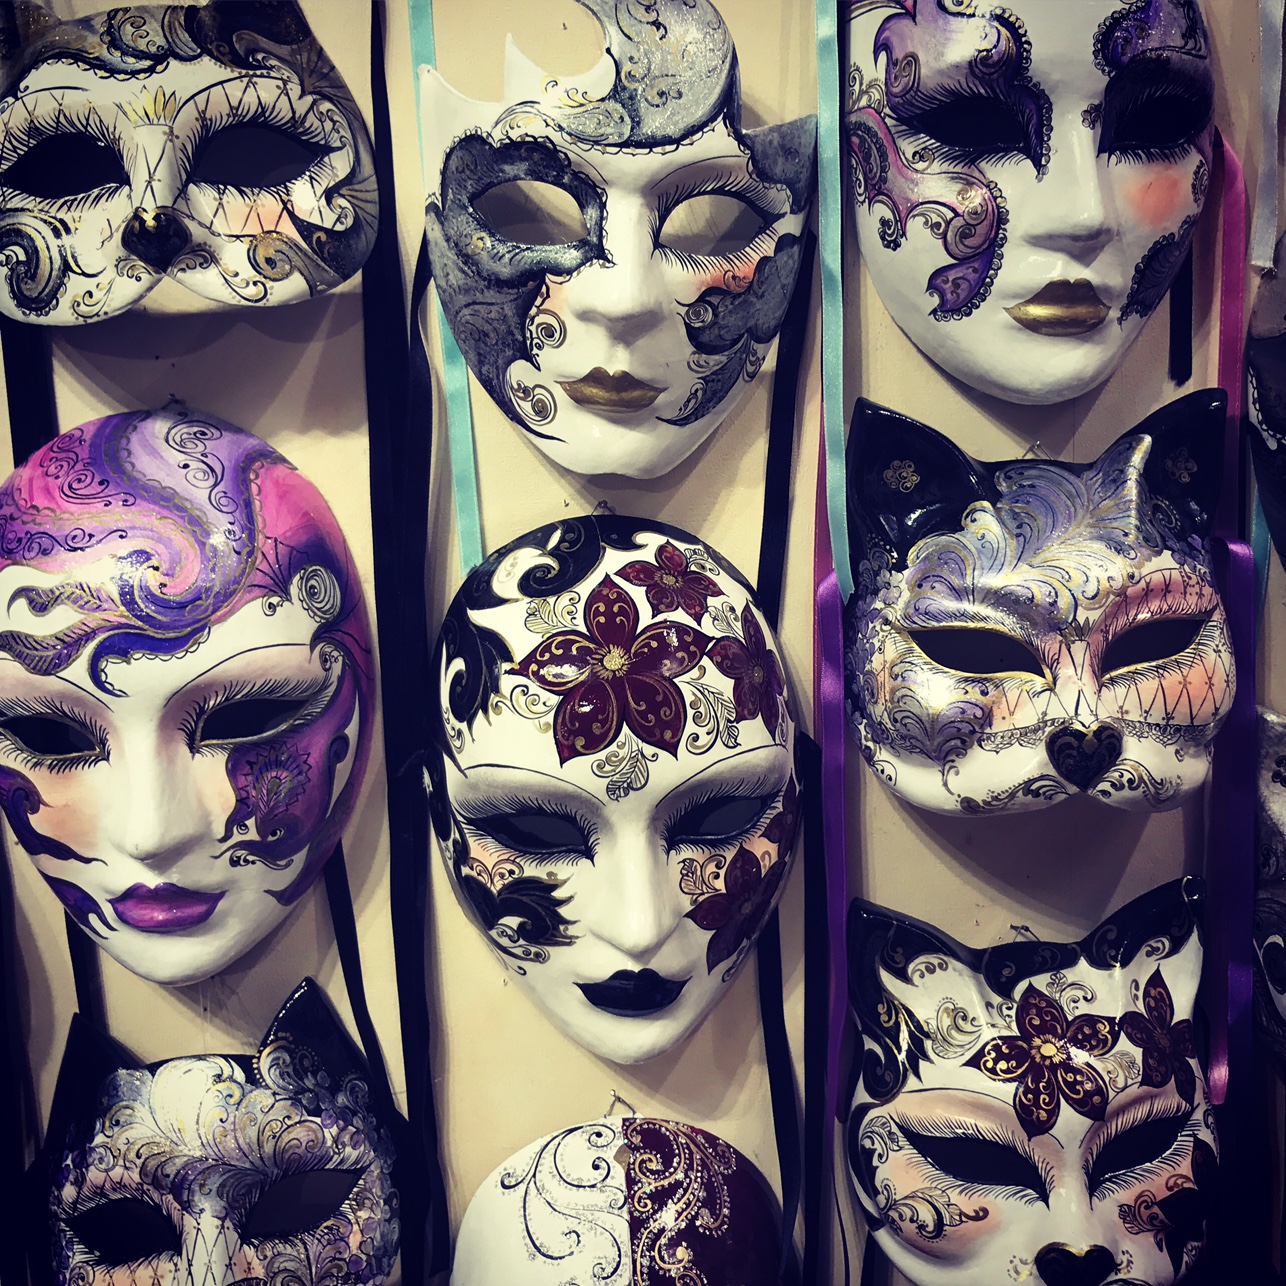 Ca'Manaca, Venetian Masks, Venice mask making